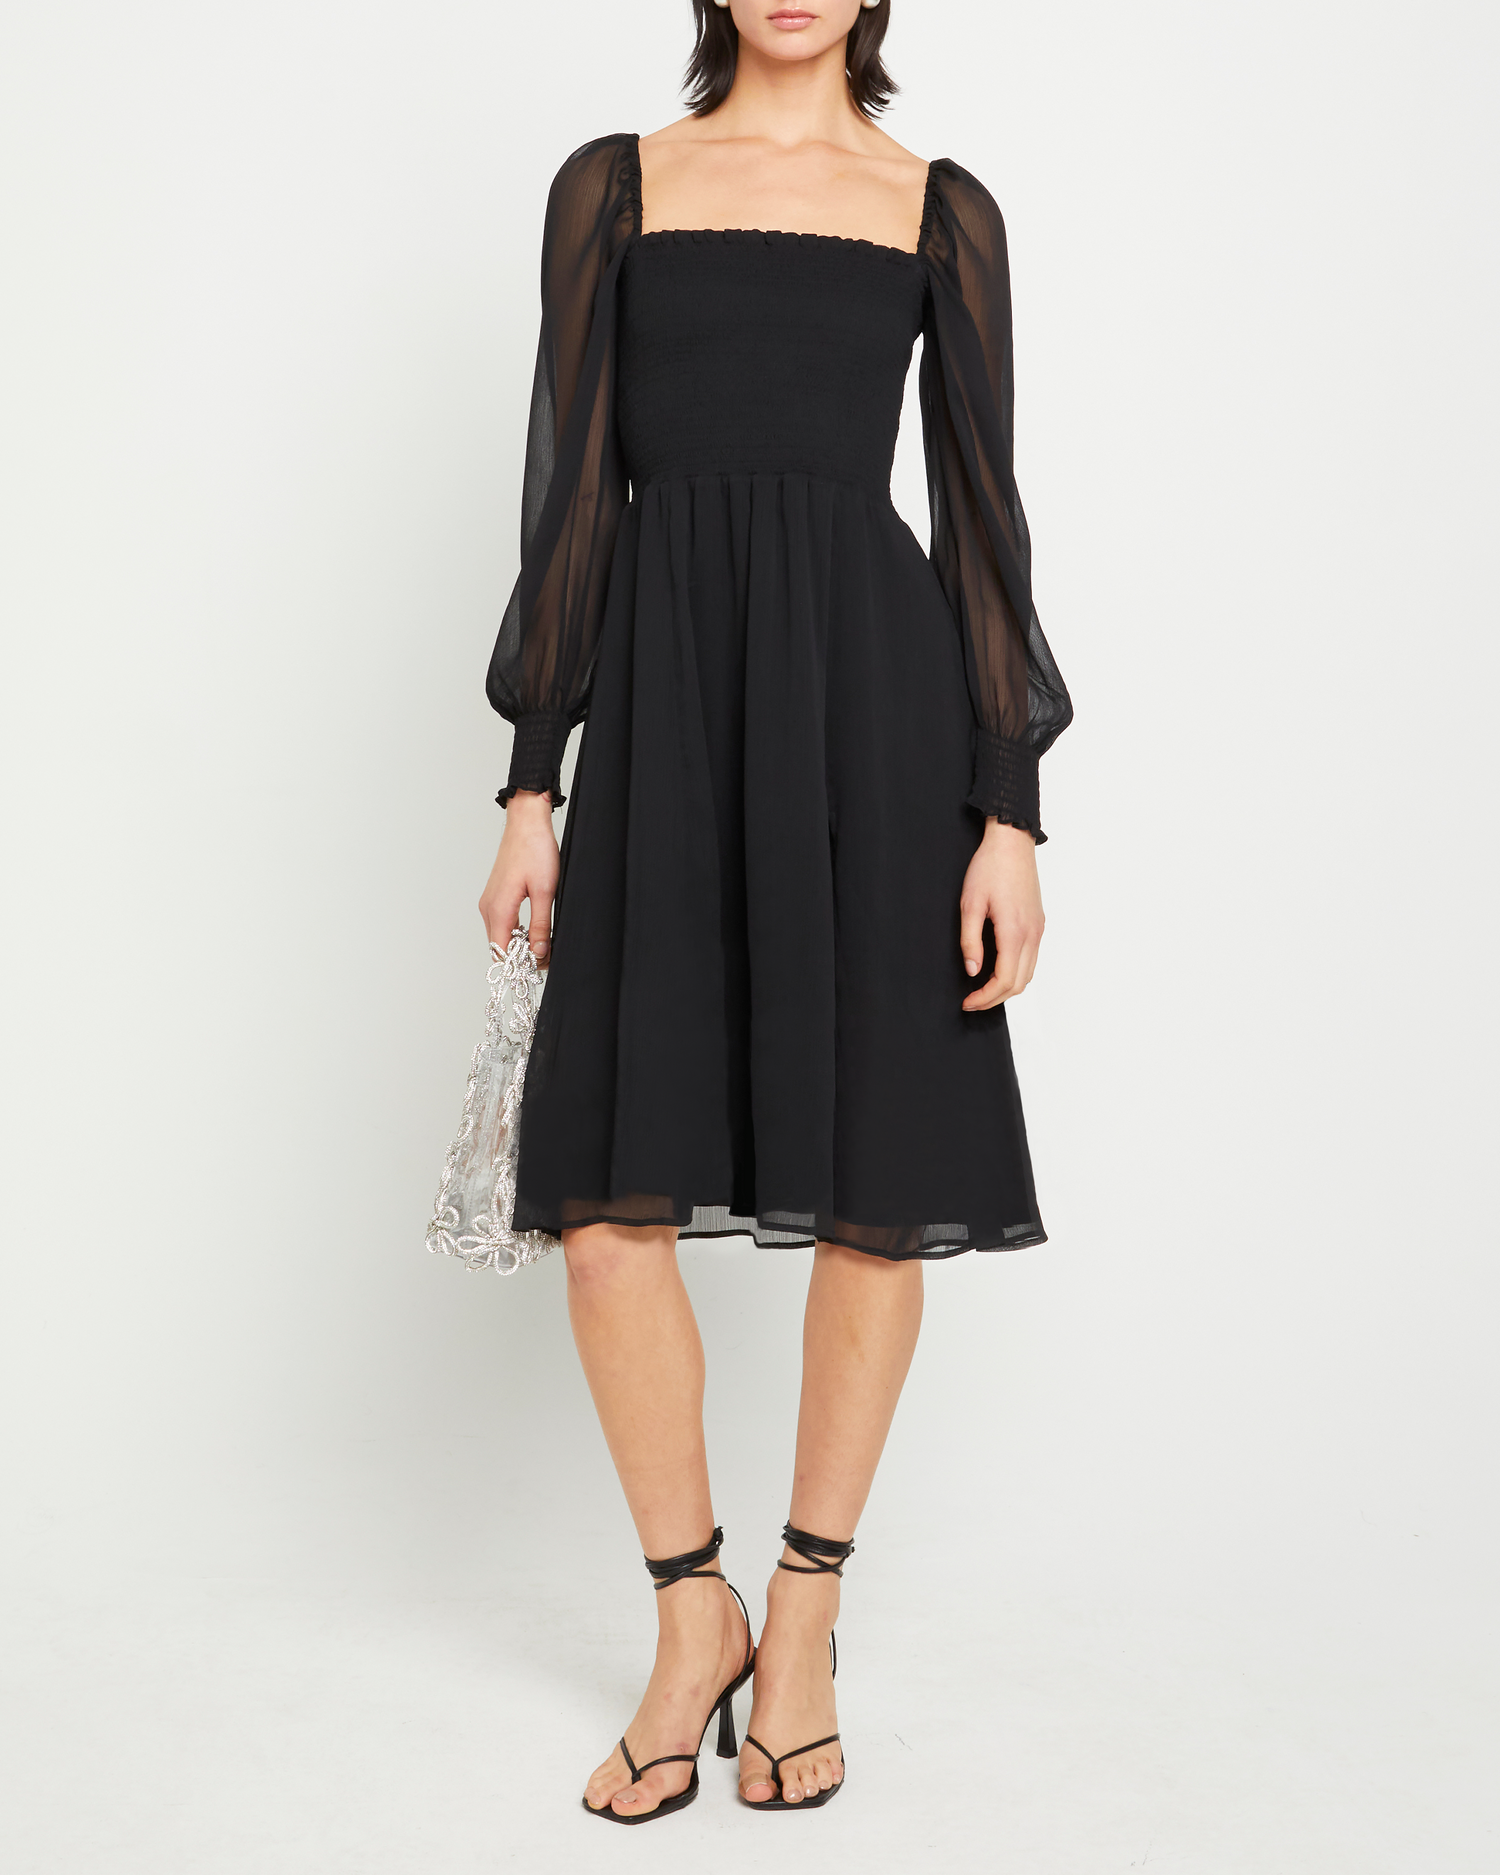 Fourth image of Classic Smocked Midi Dress, a black midi dress, side slit, long, sheer sleeves, puff sleeves, square neckline, smocked bodice